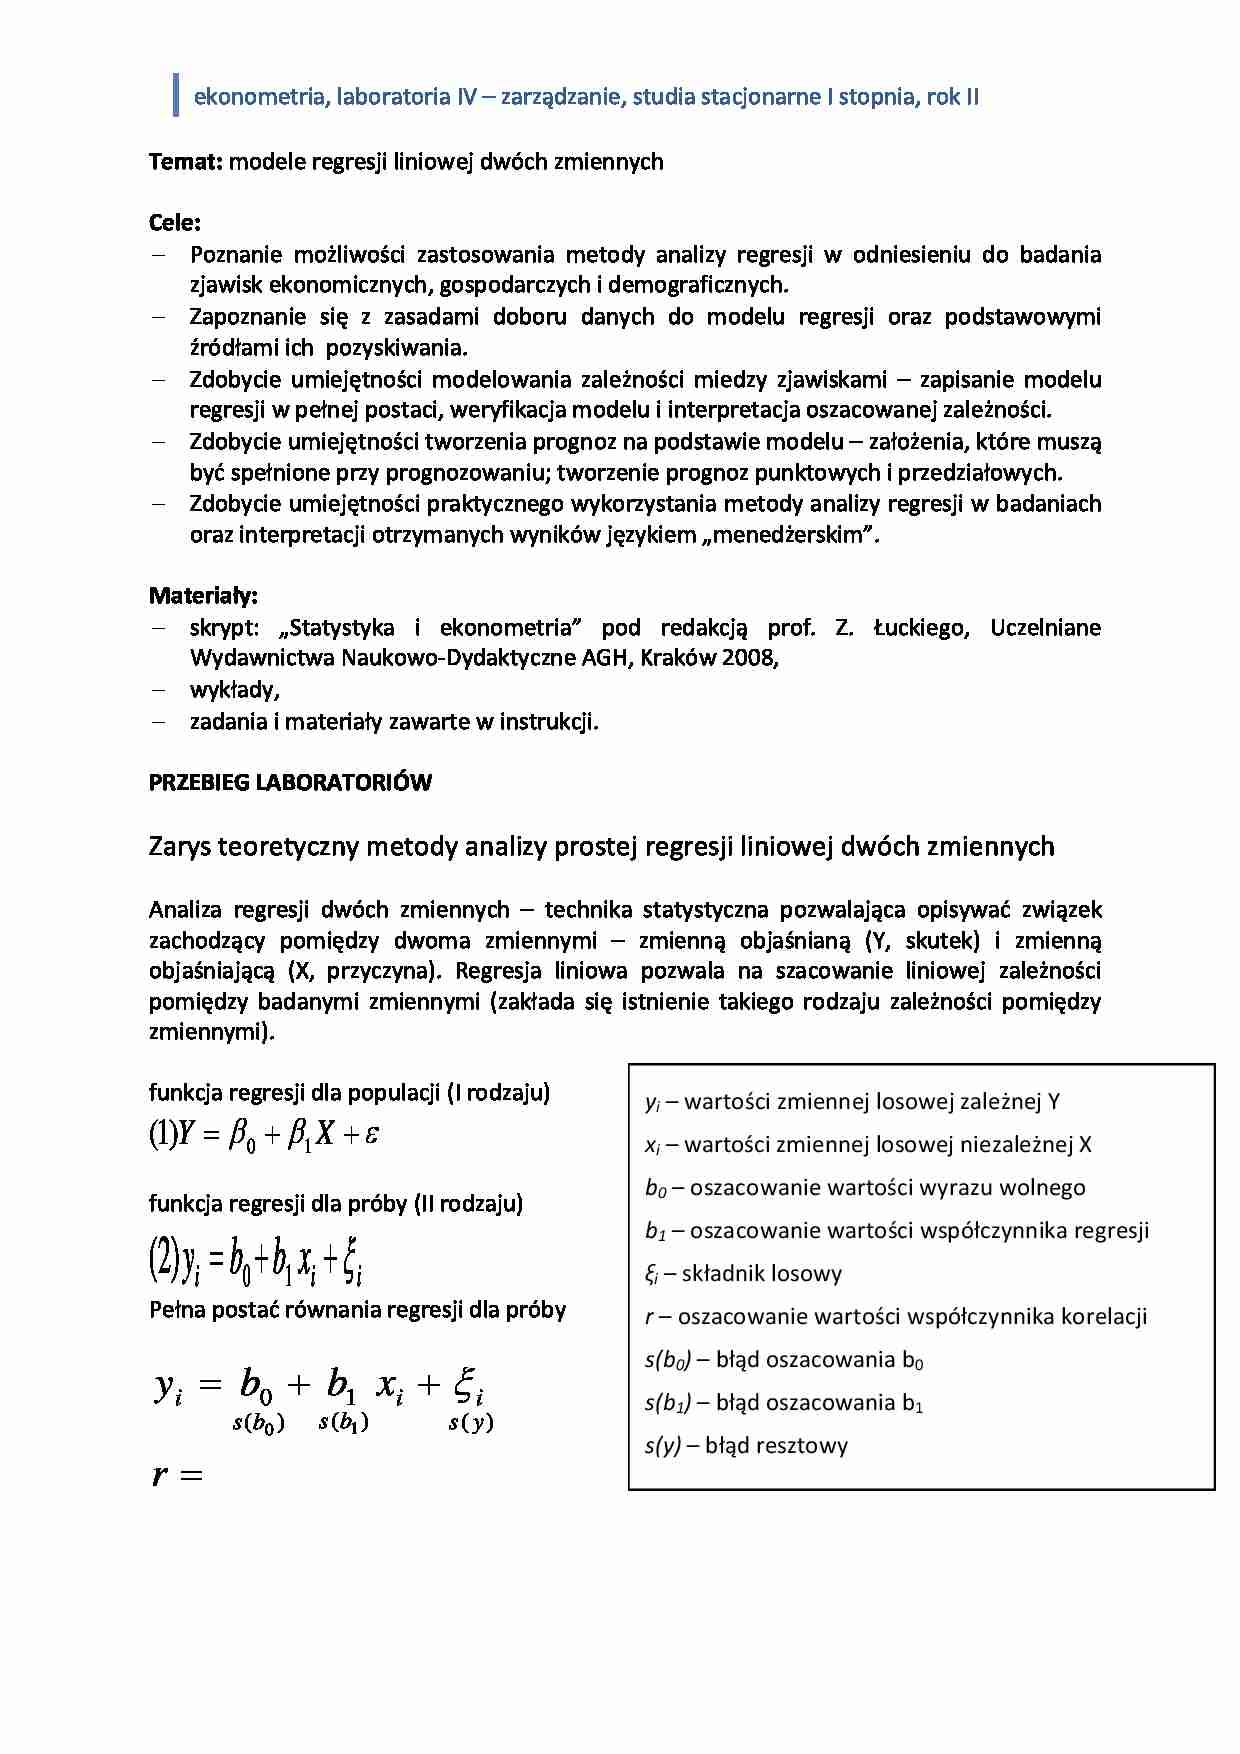 Ekonometria - laboratoria 4 - strona 1